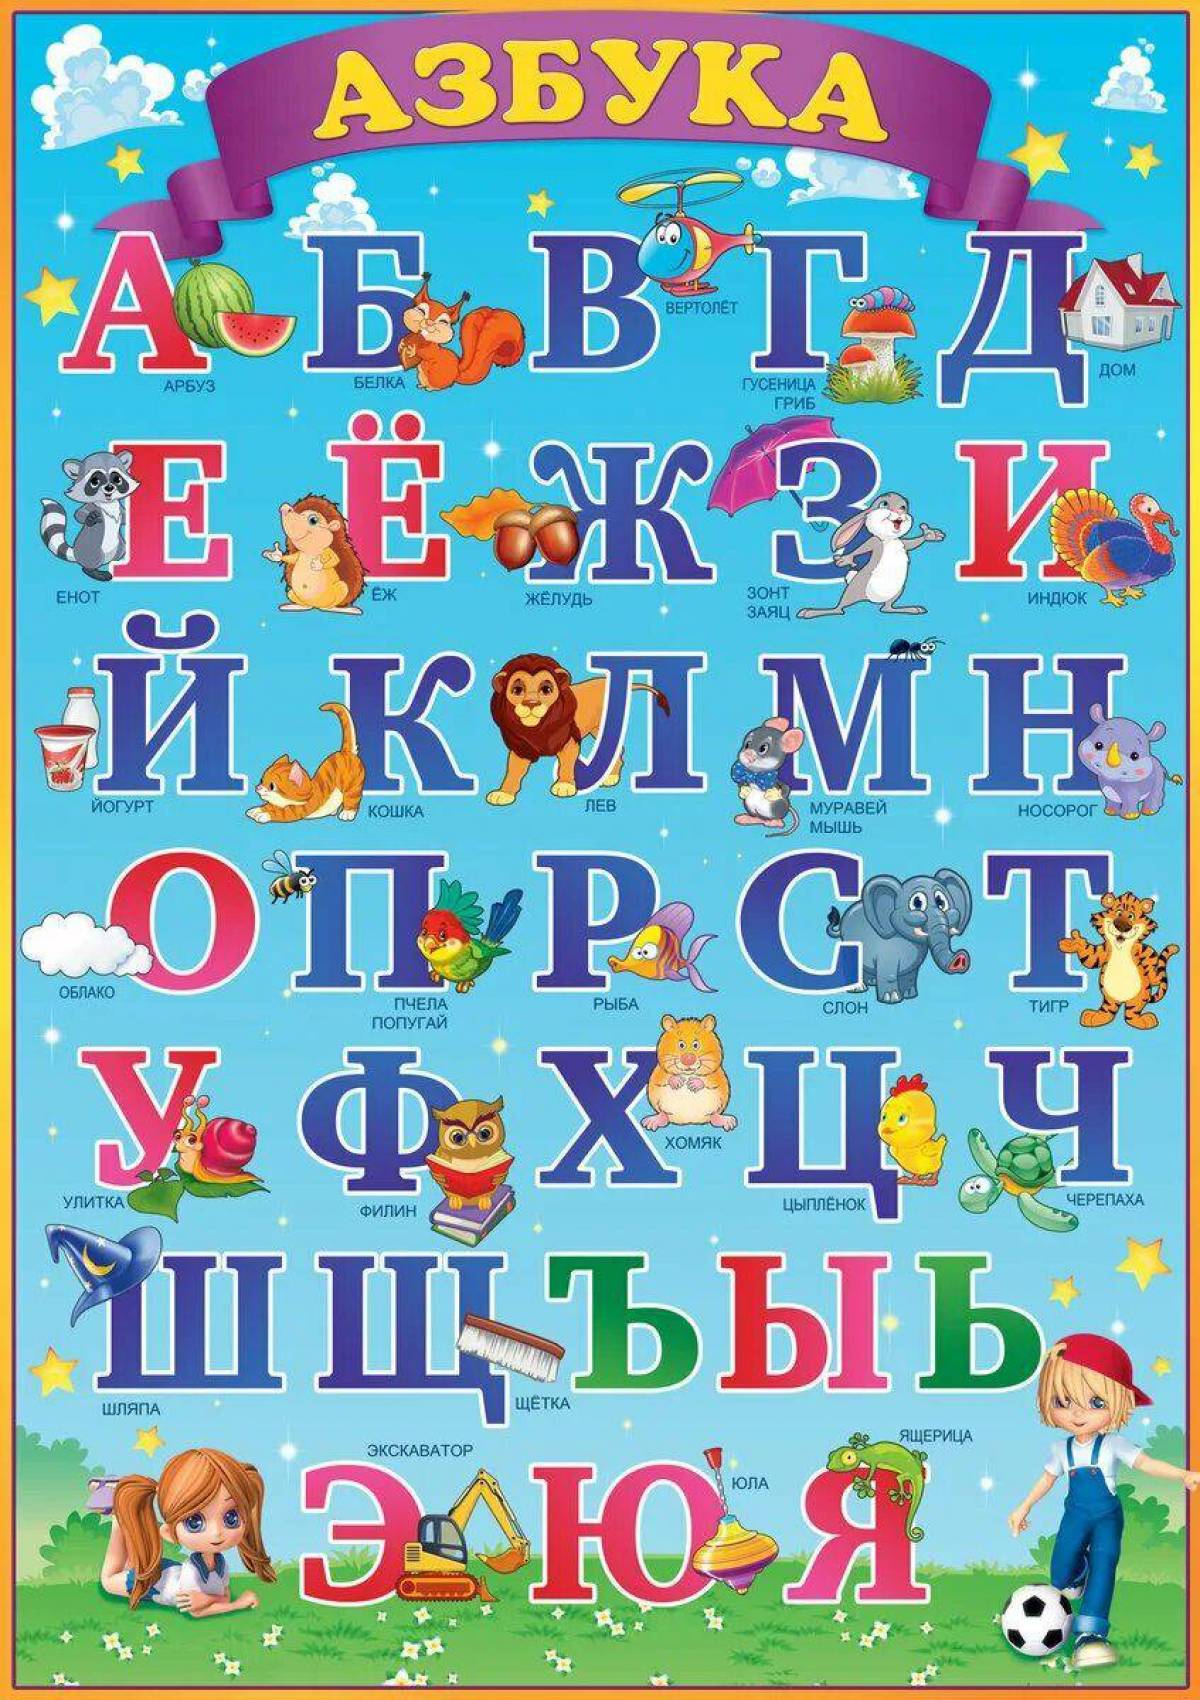 Включи фотки алфавита. Азбука для детей. Алфавит русский для детей. Азбука детская в картинках. Плакат алфавит для детей.